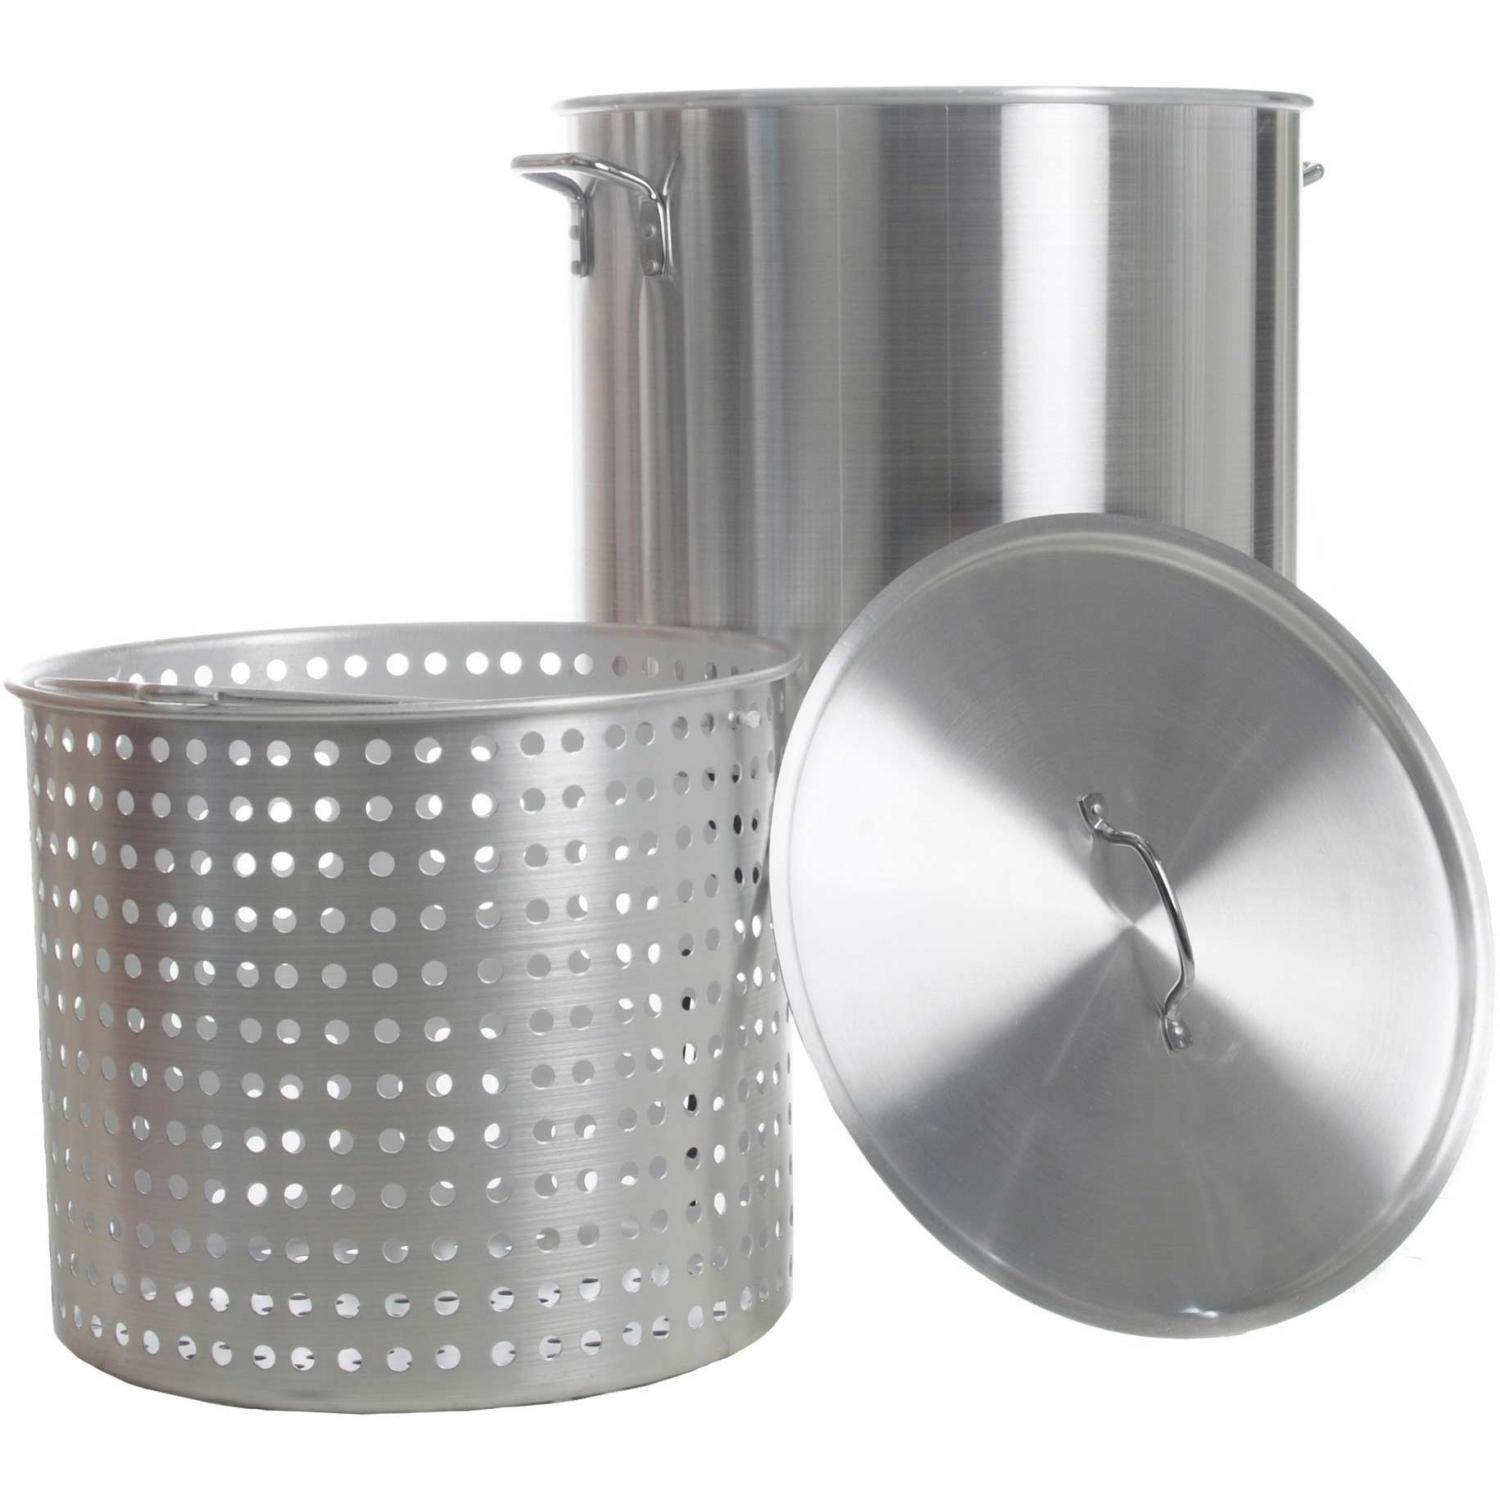 Aluminum Boiling Pot with Basket and Lid, 100 quart – Richard's Kitchen  Store